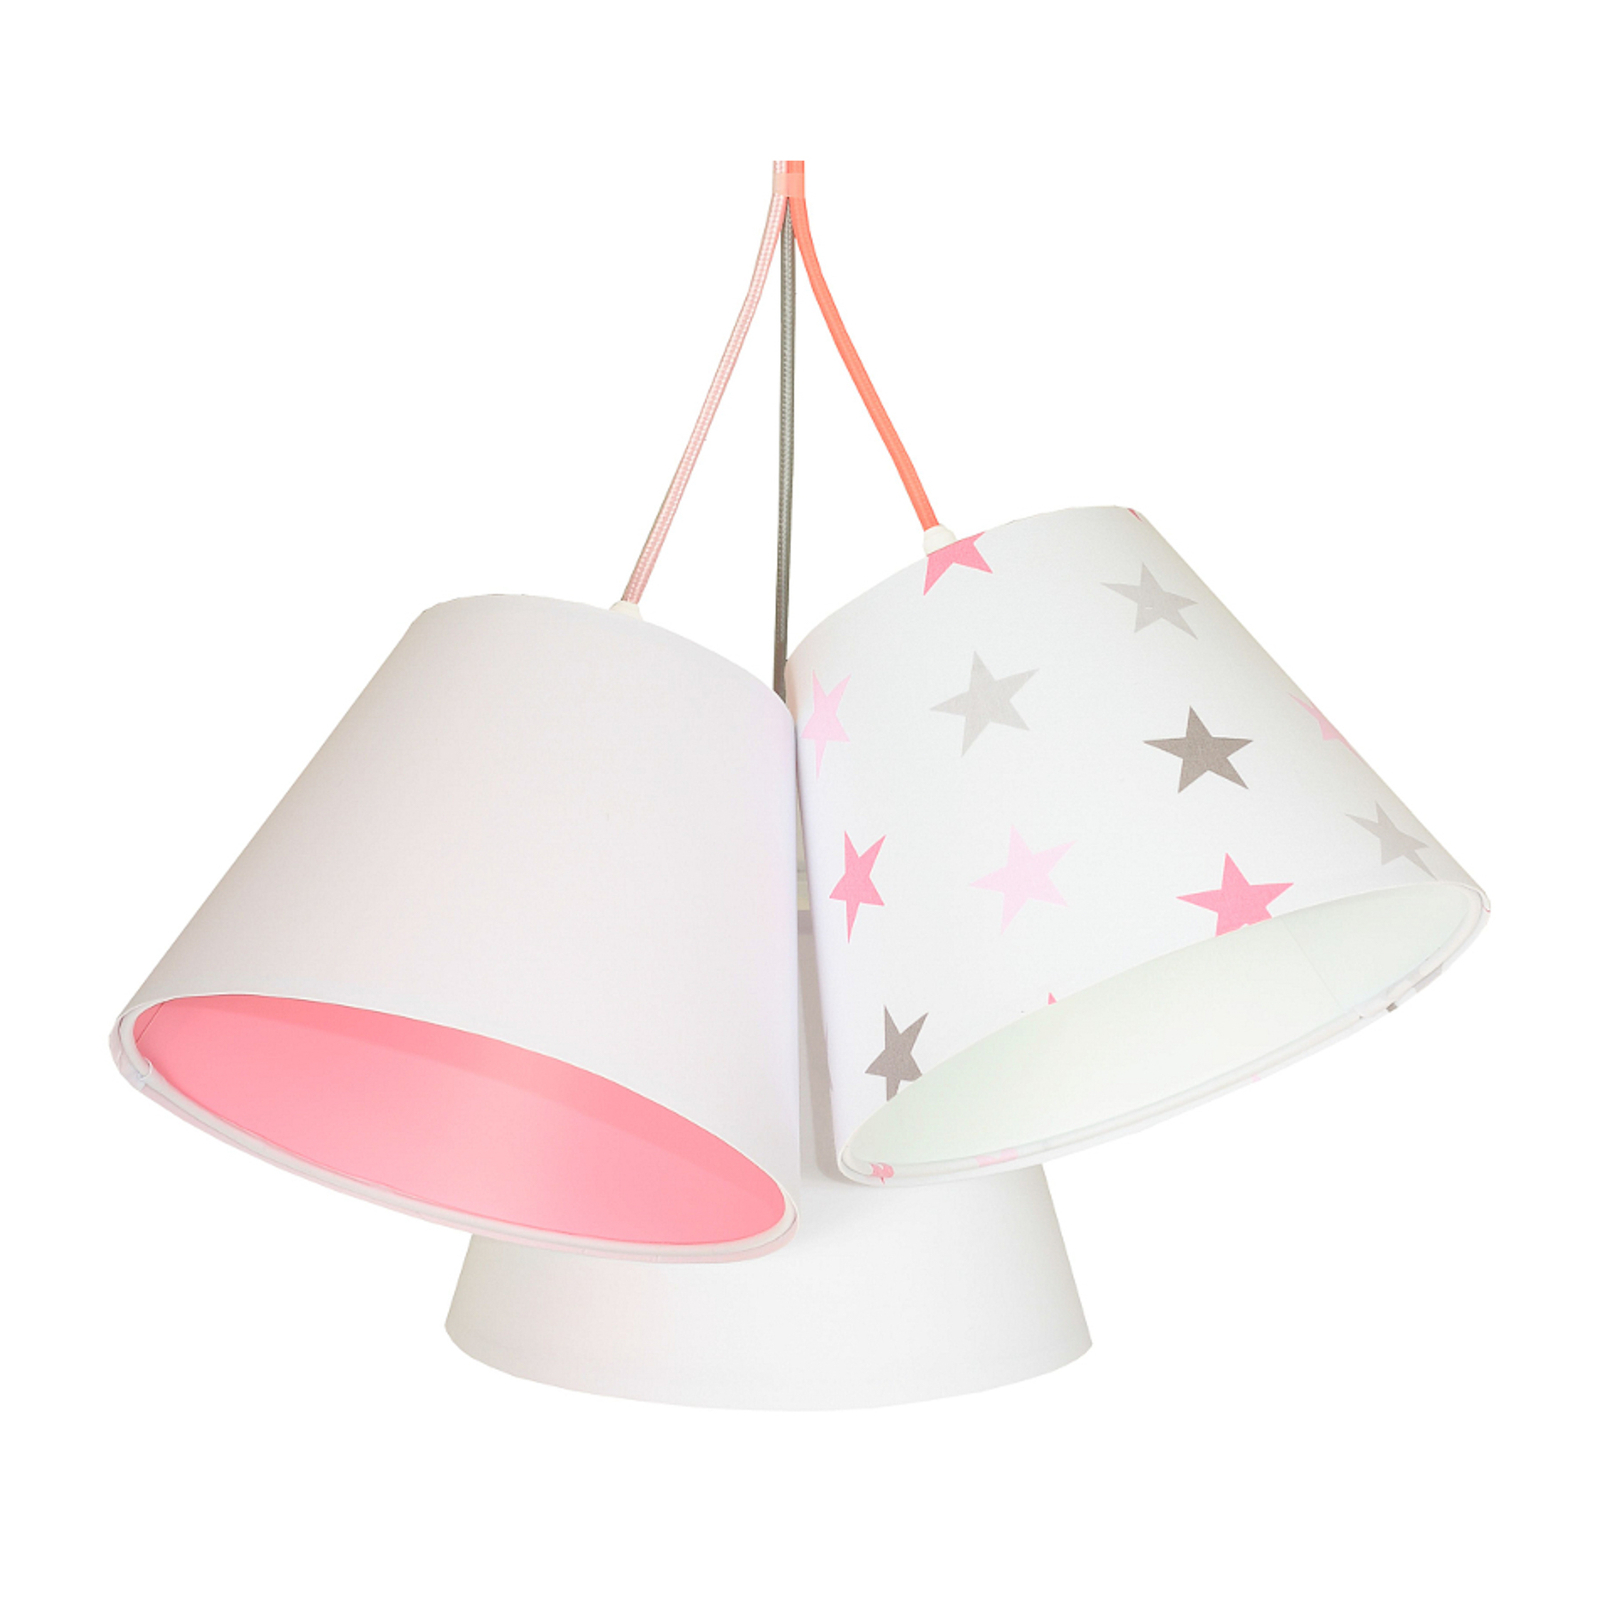 Kinderkamer-hanglamp Zsofia 3-lamps wit/roze